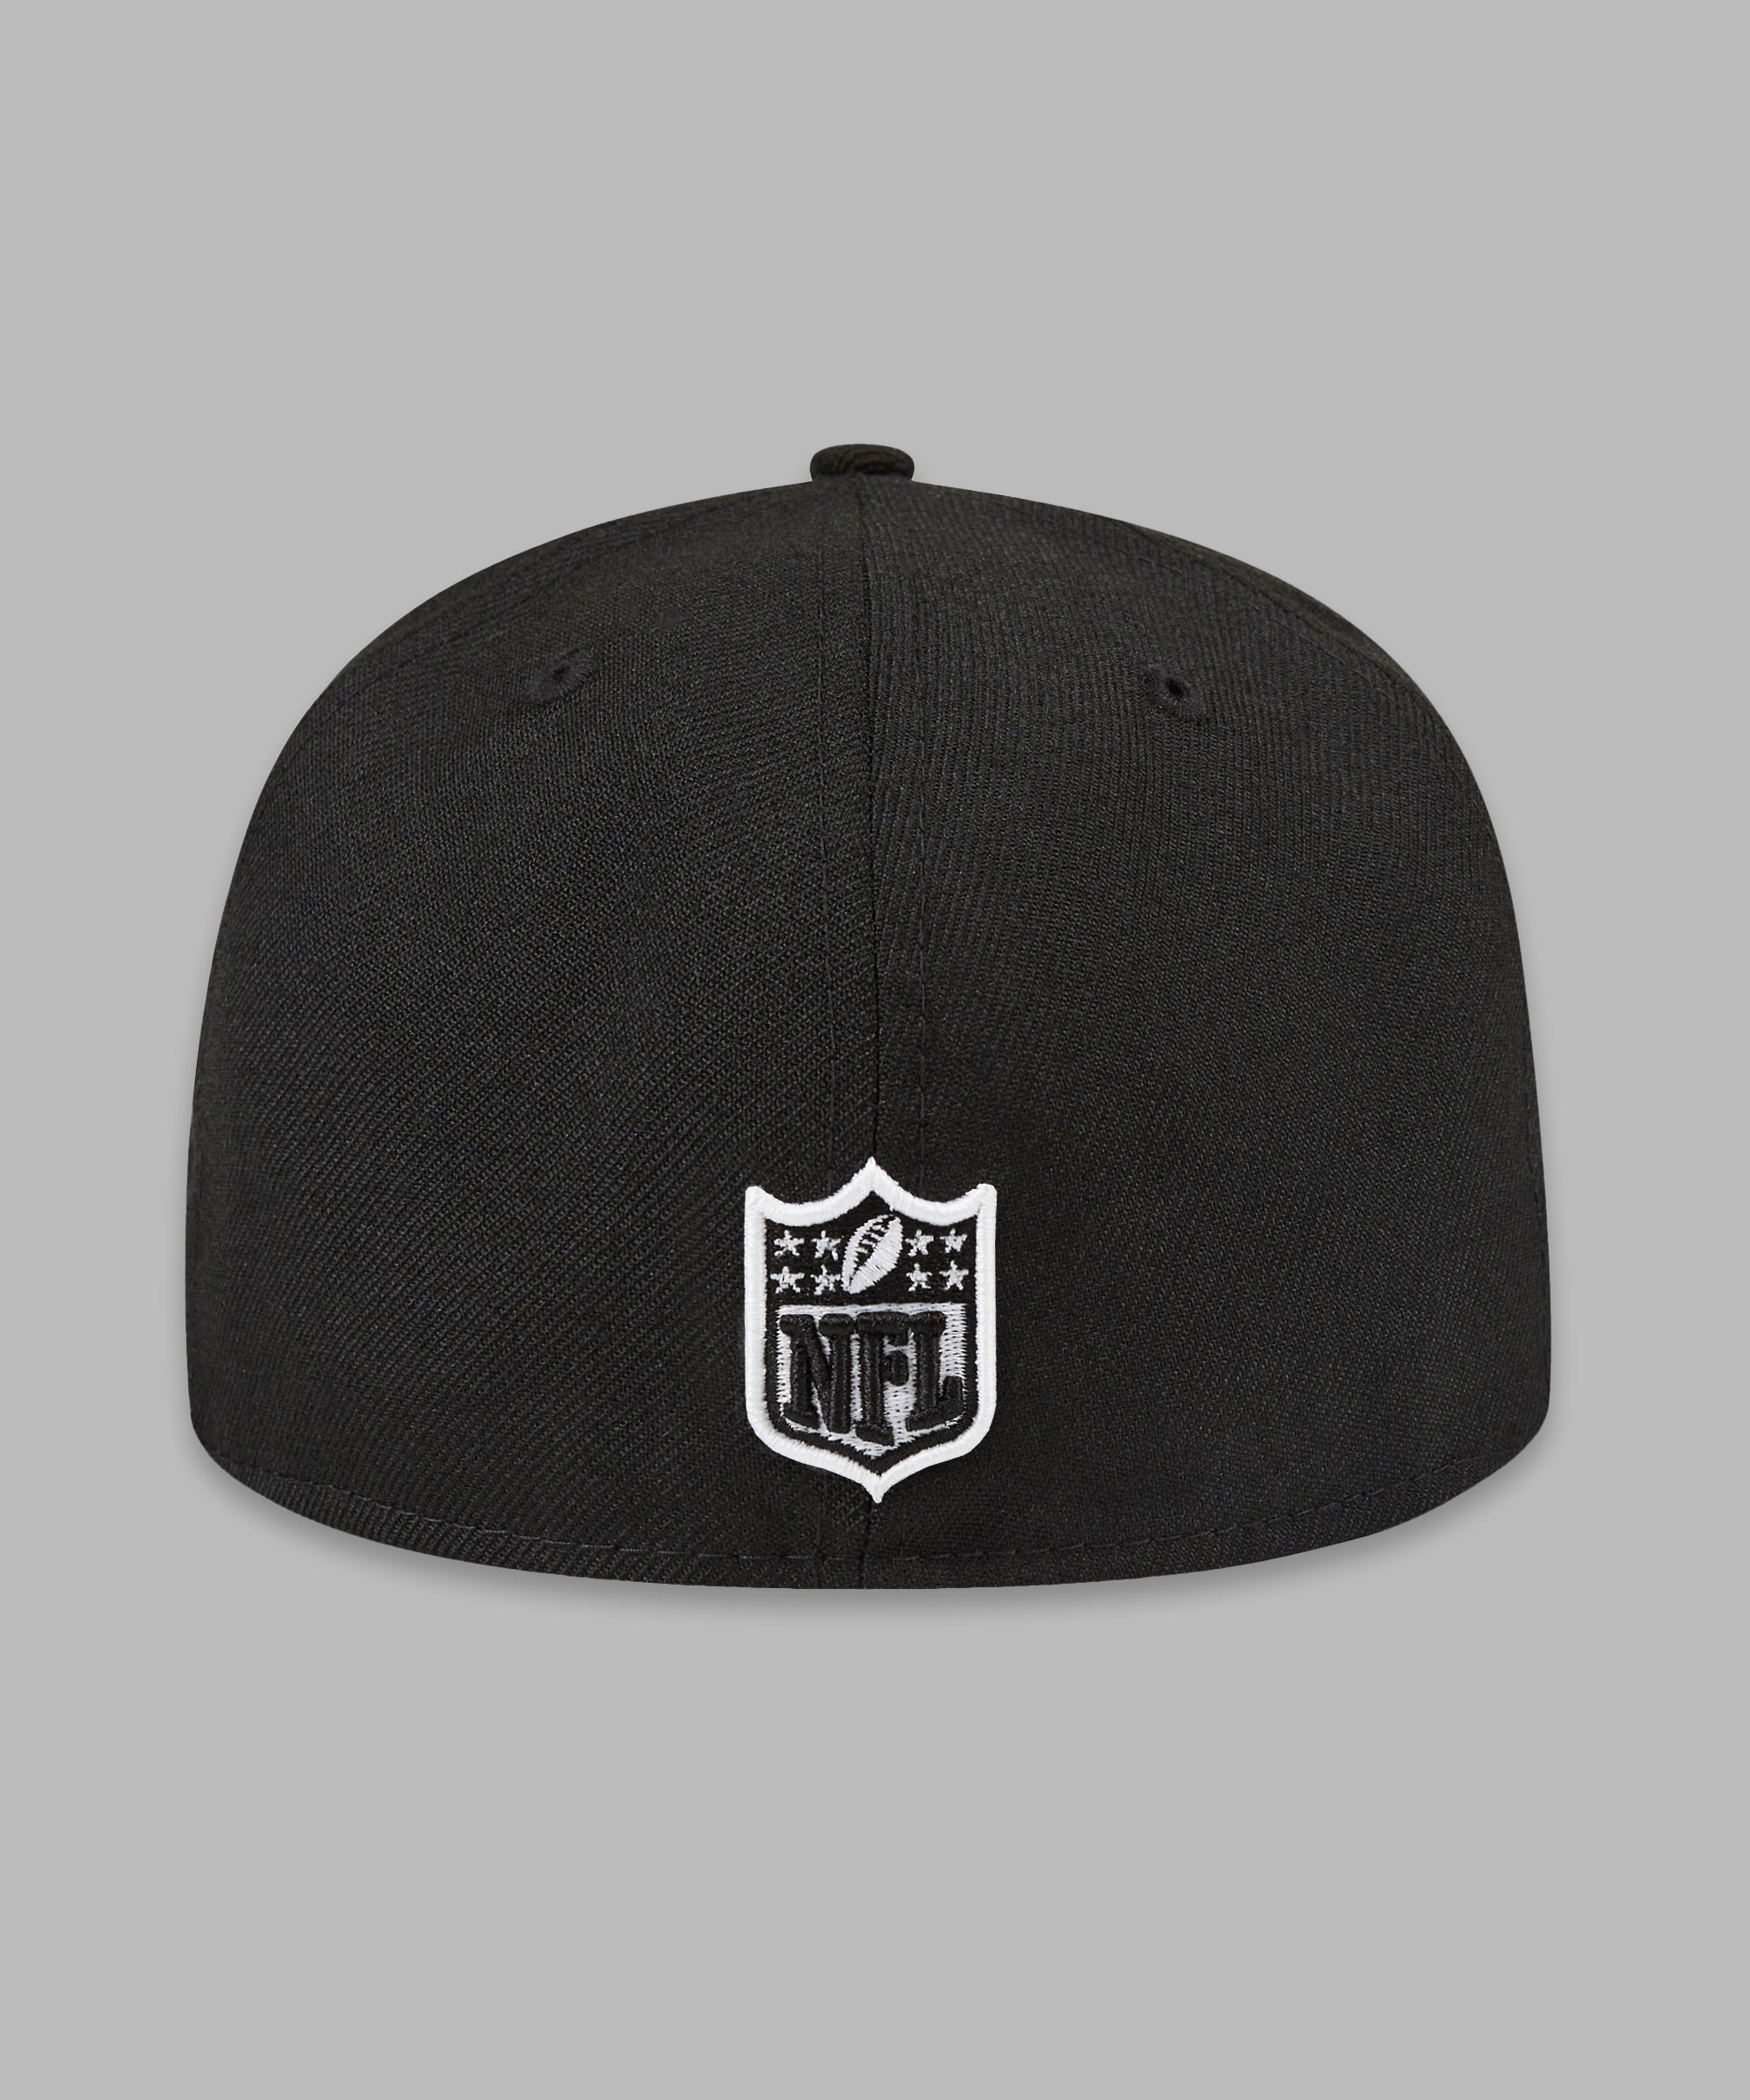 Los Angeles Rams Snapbacks, Rams Snapback Hats, Flat Billed Hat